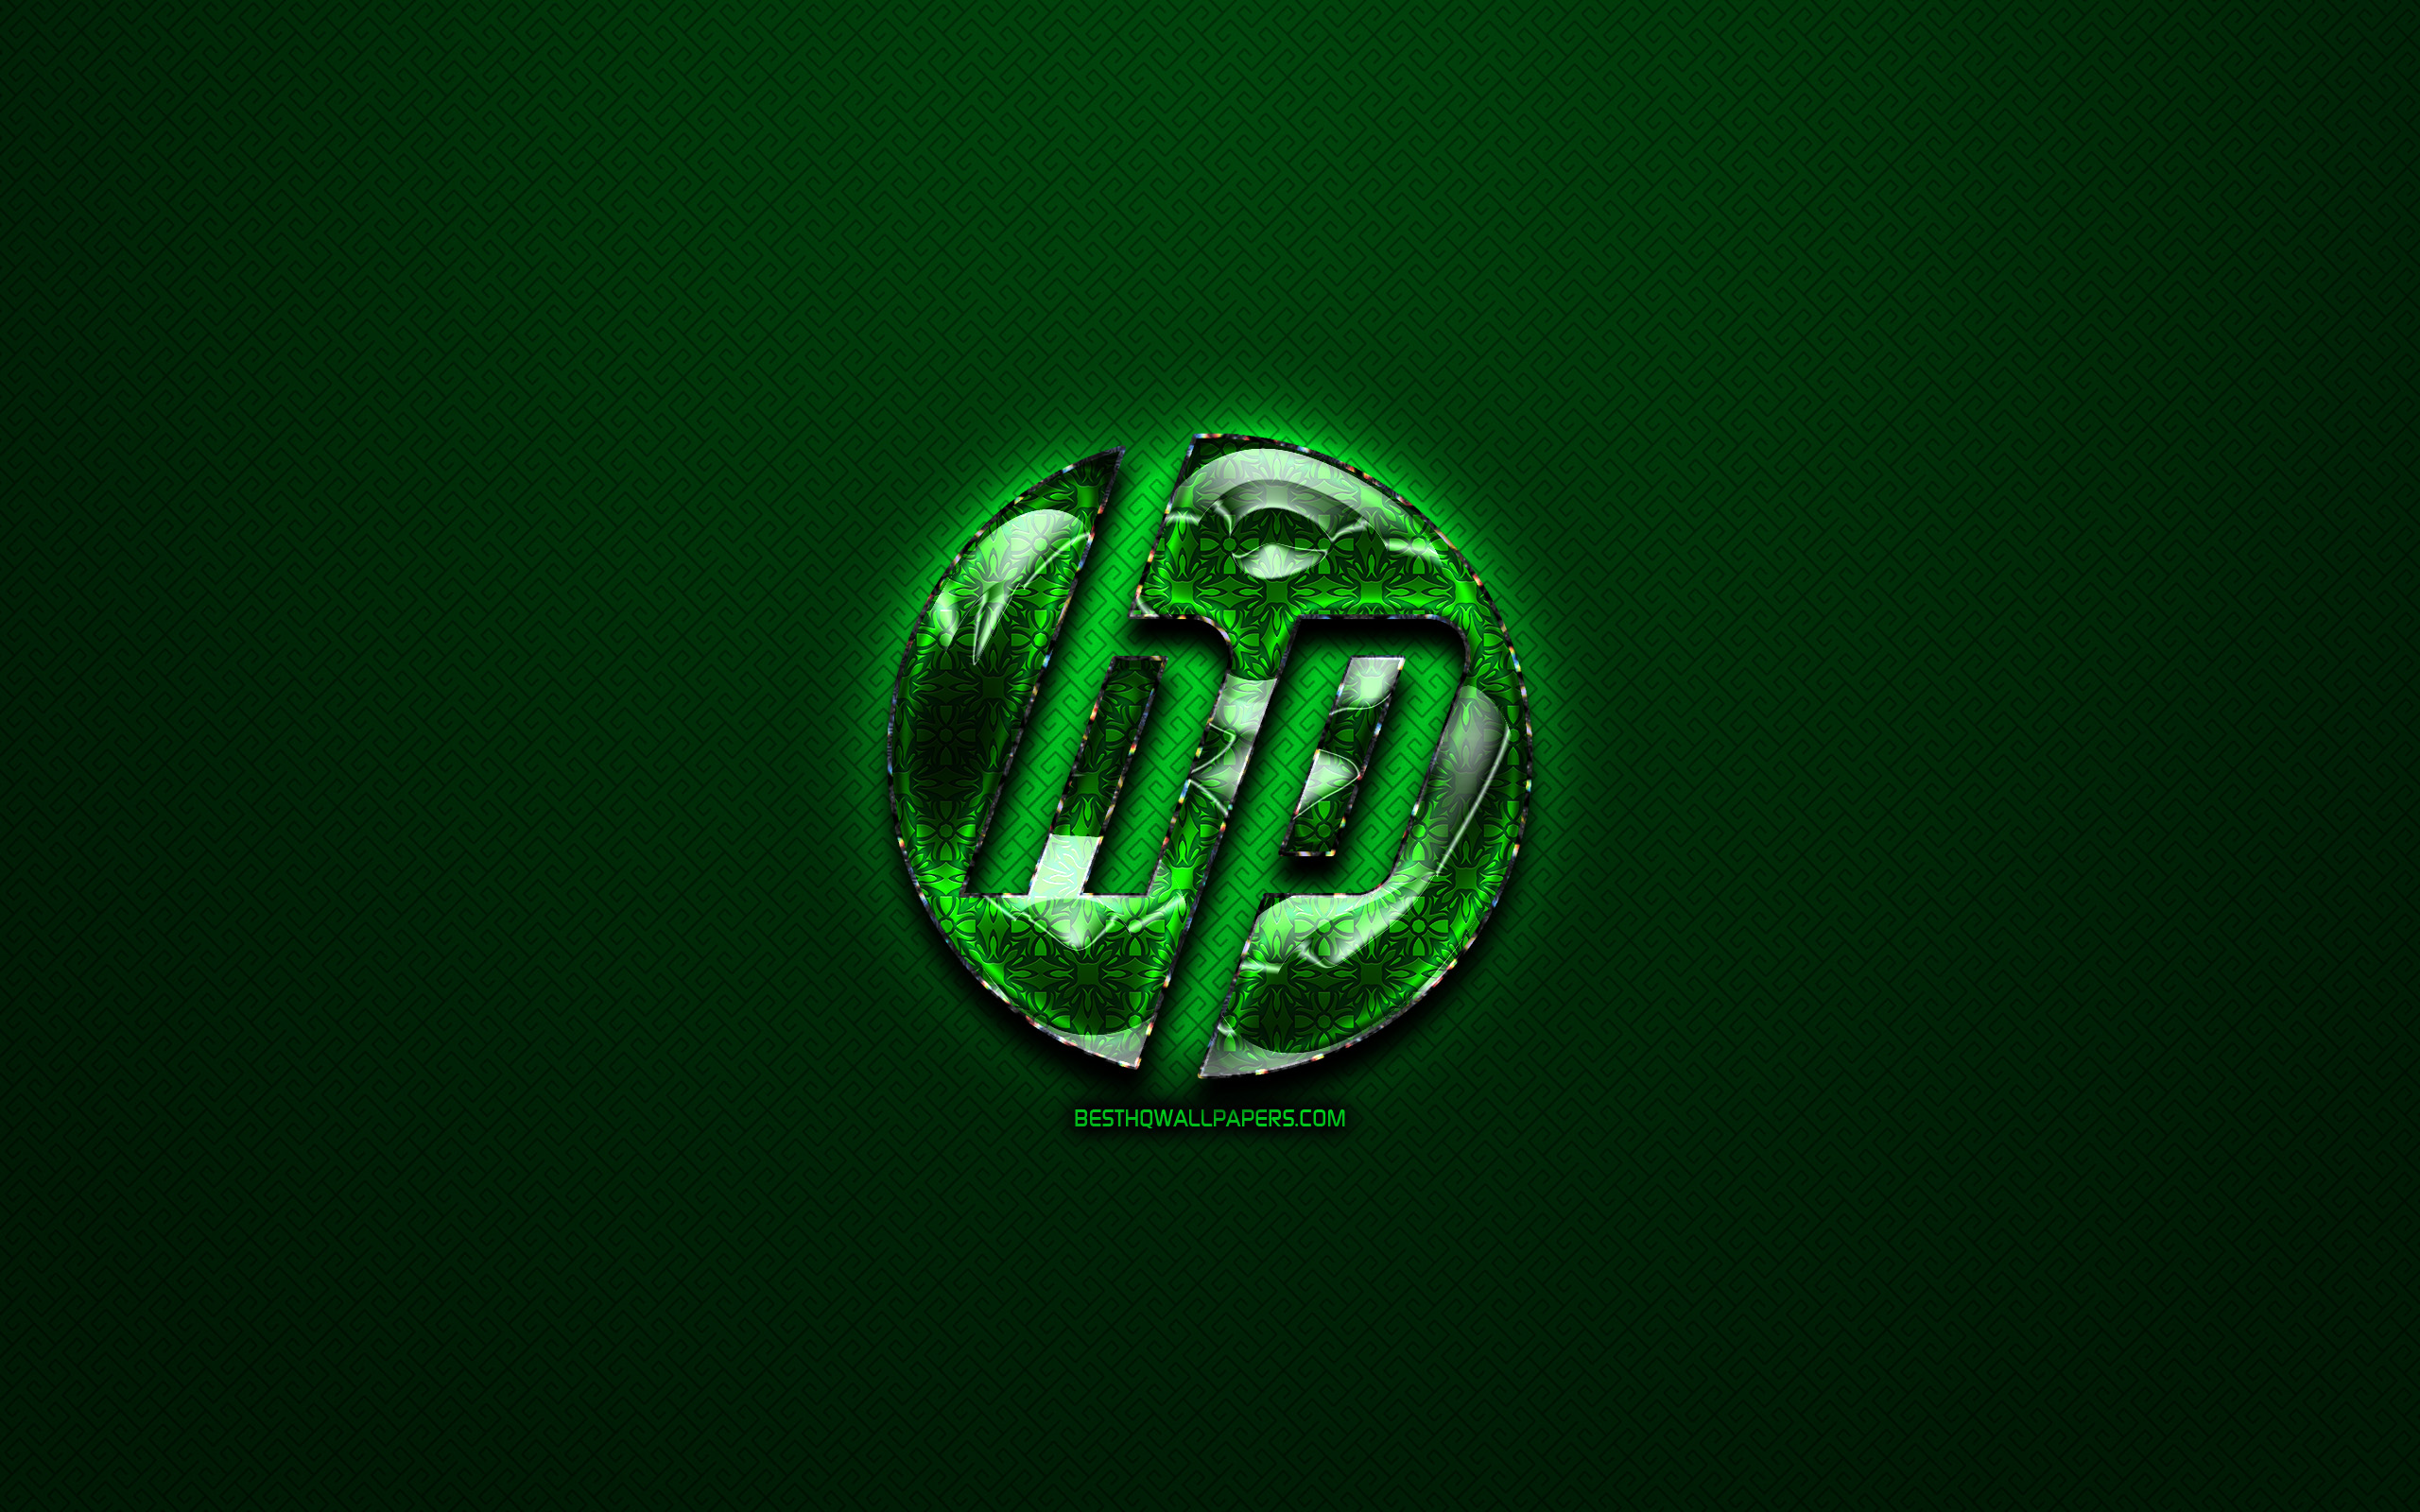 Download wallpaper HP green logo, green vintage background